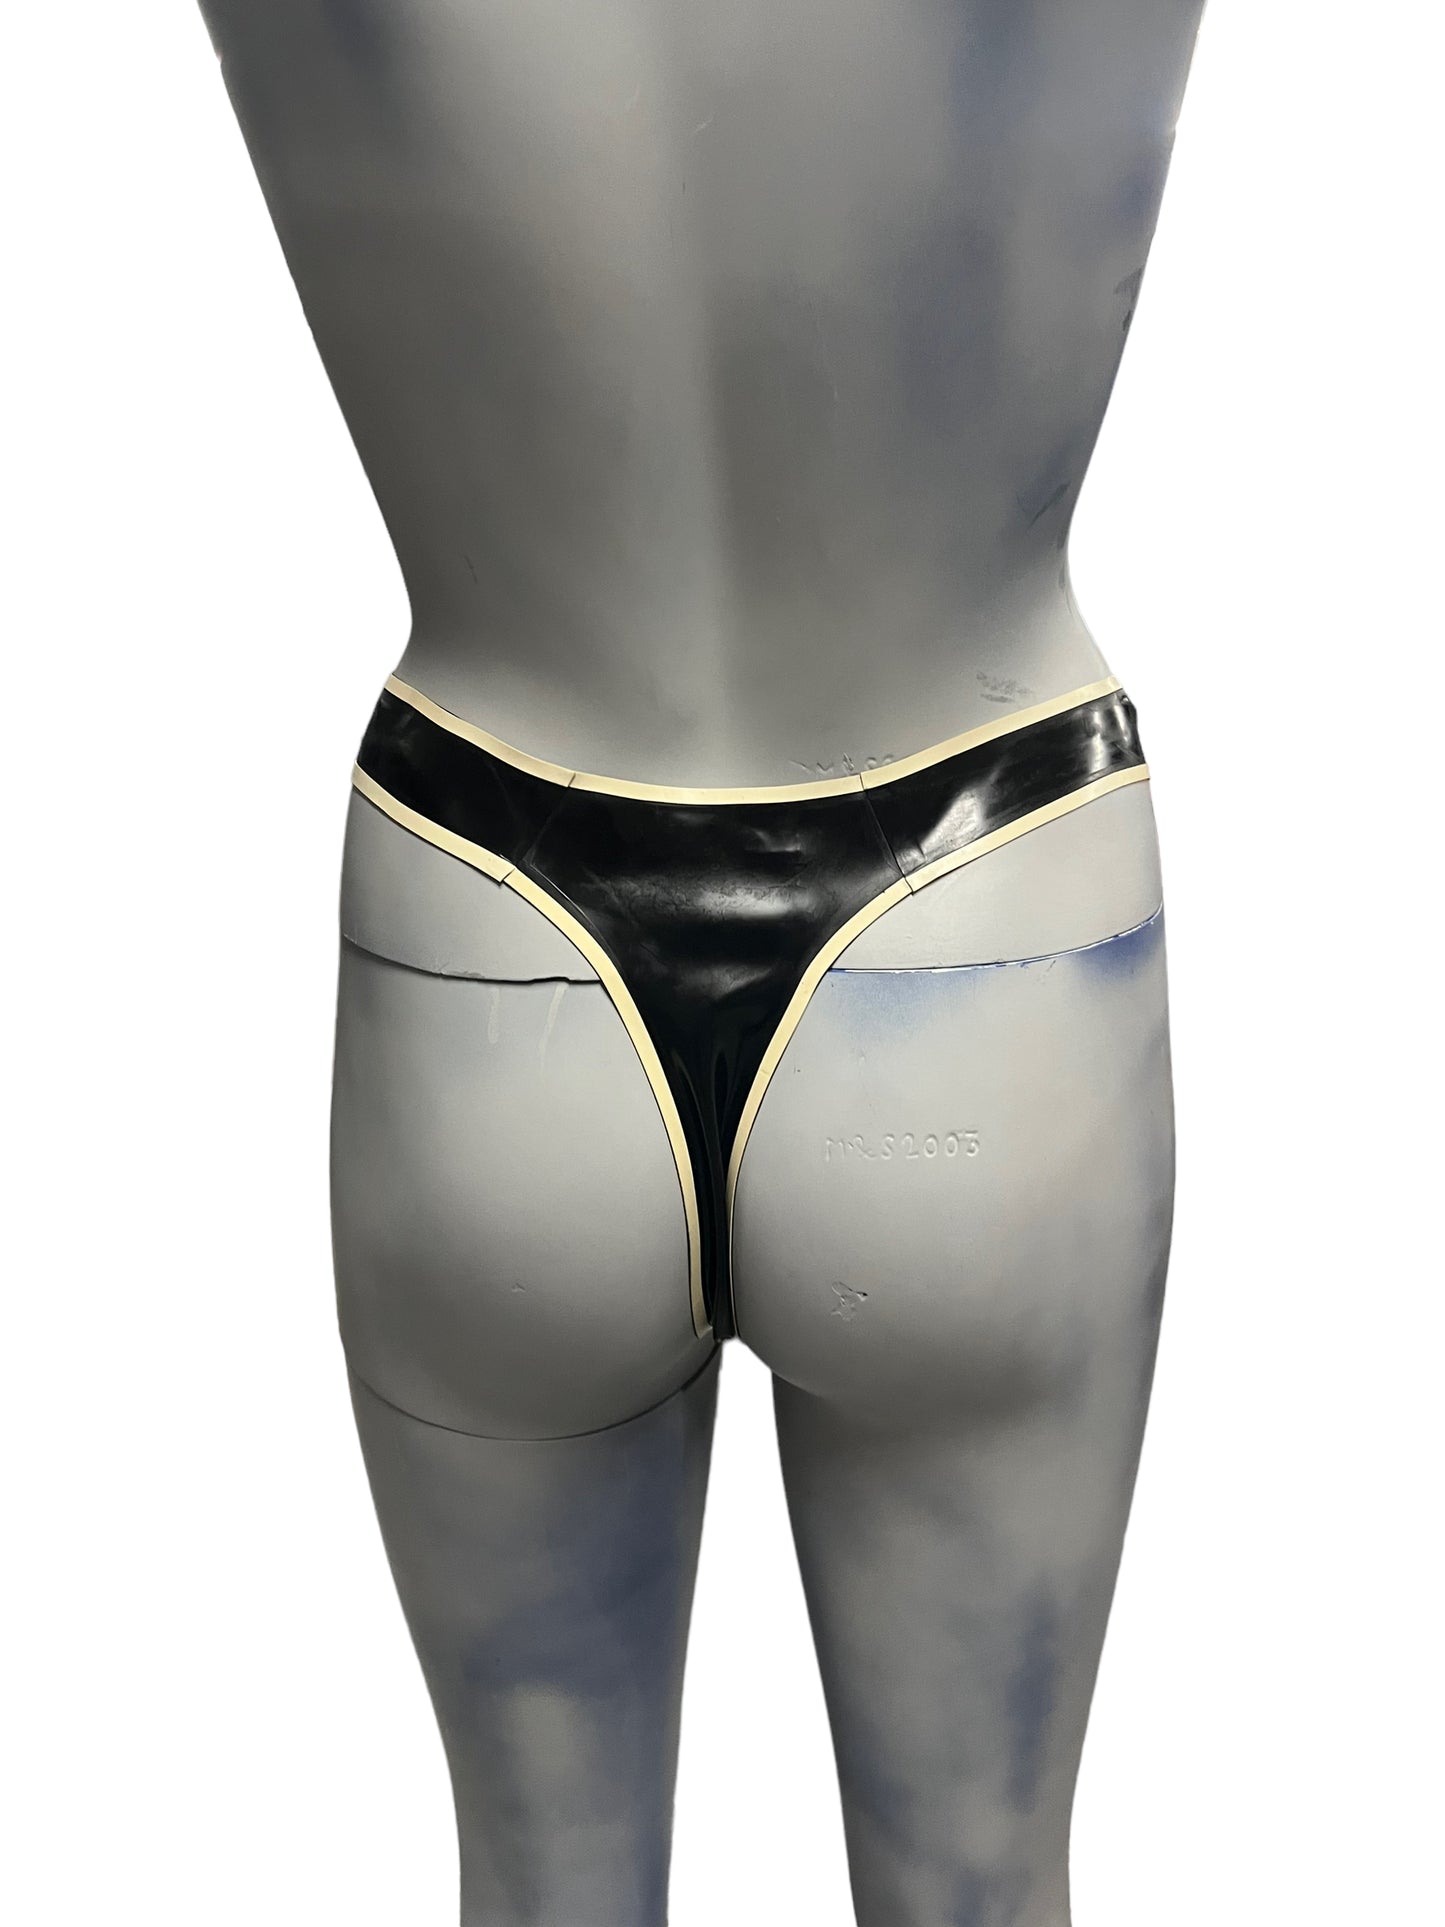 Peter Domenie - LL91 - Provocative Latex Panties - Size XL